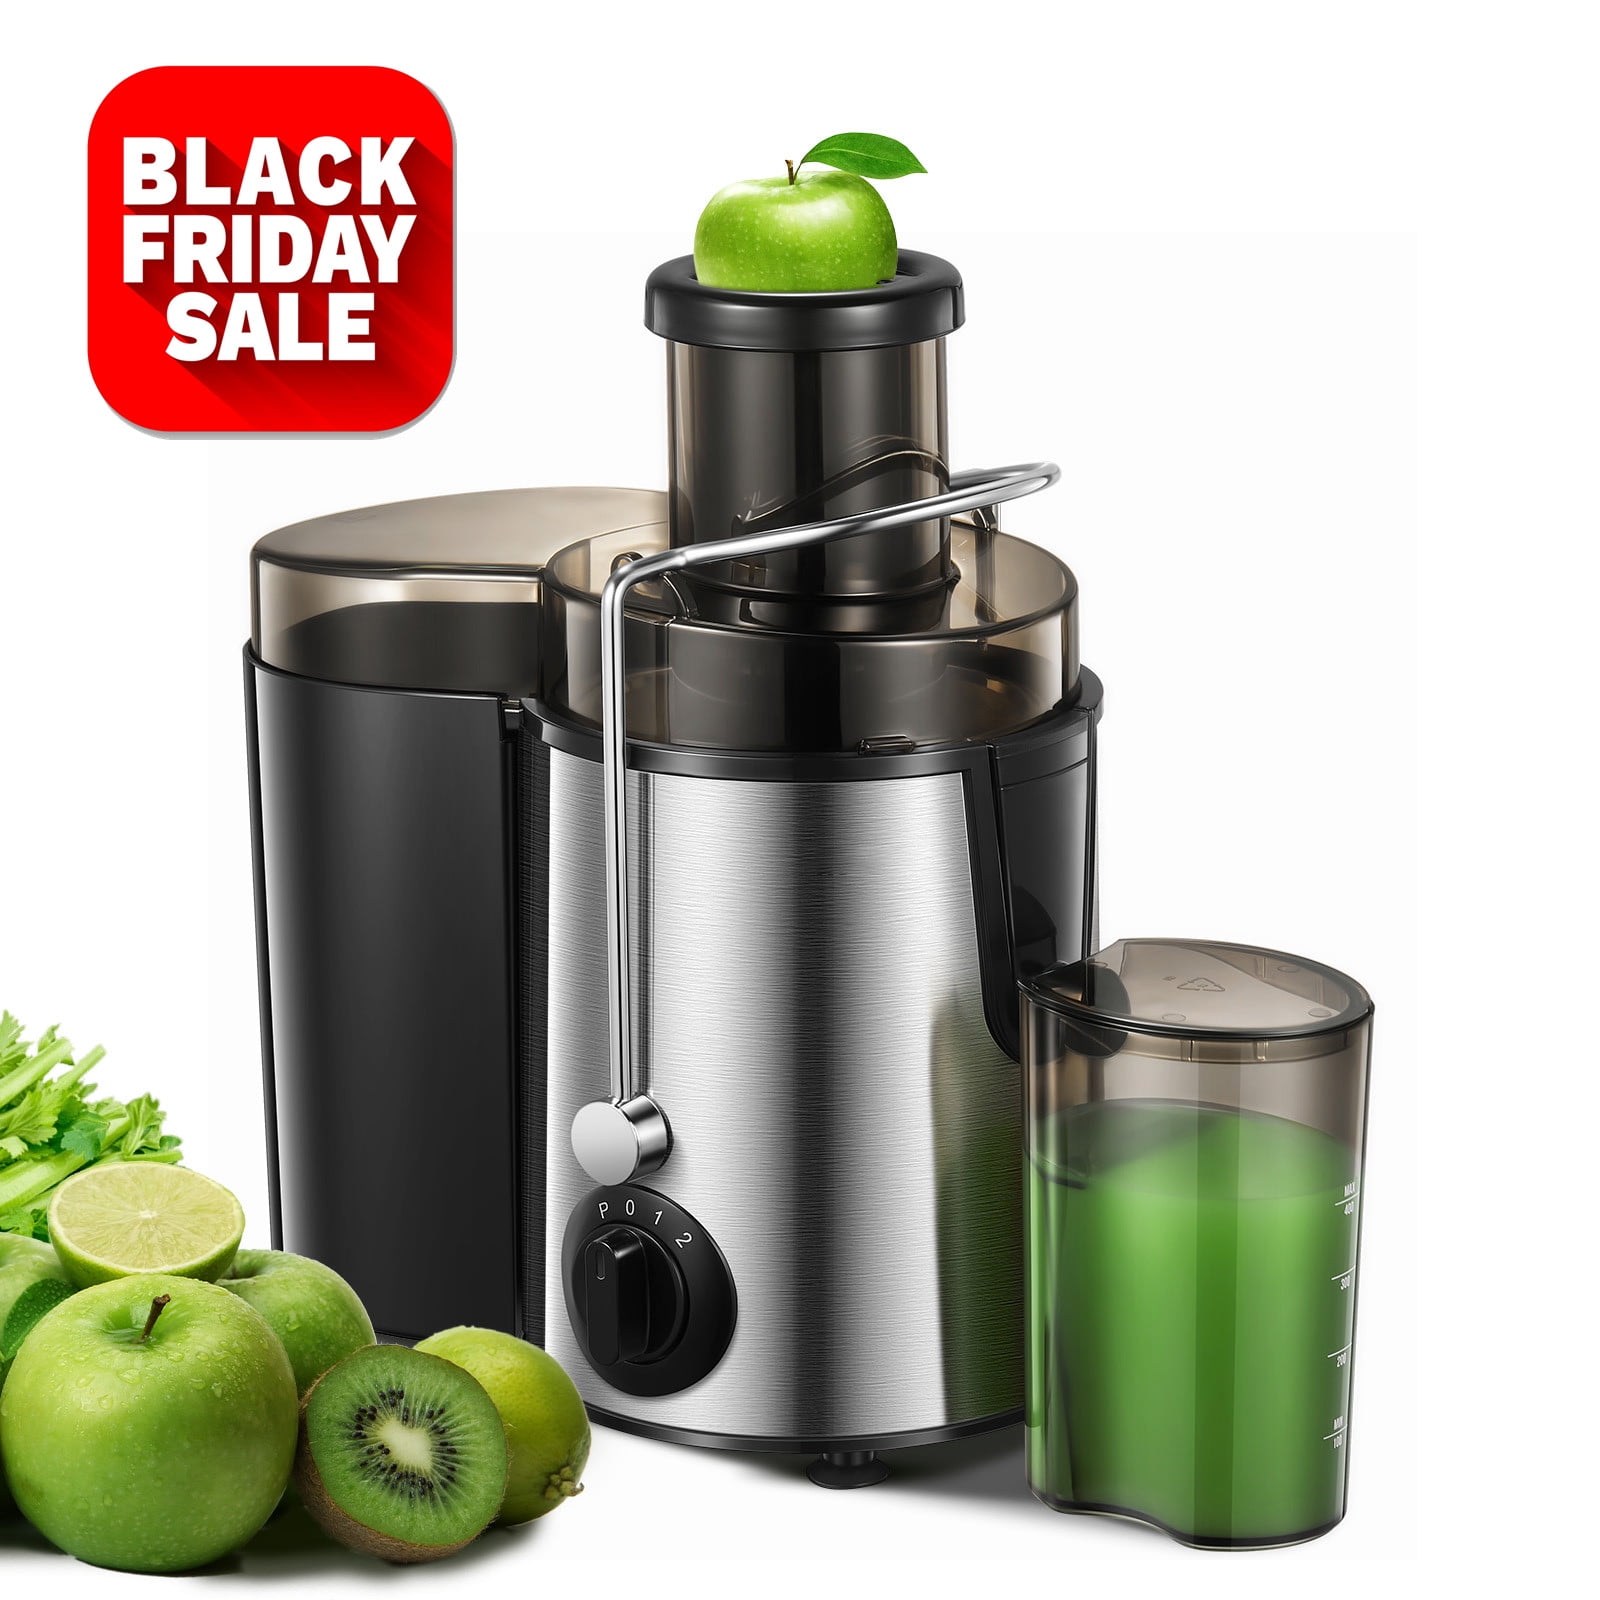  BLACK+DECKER 400-Watt Fruit and Vegetable Juice